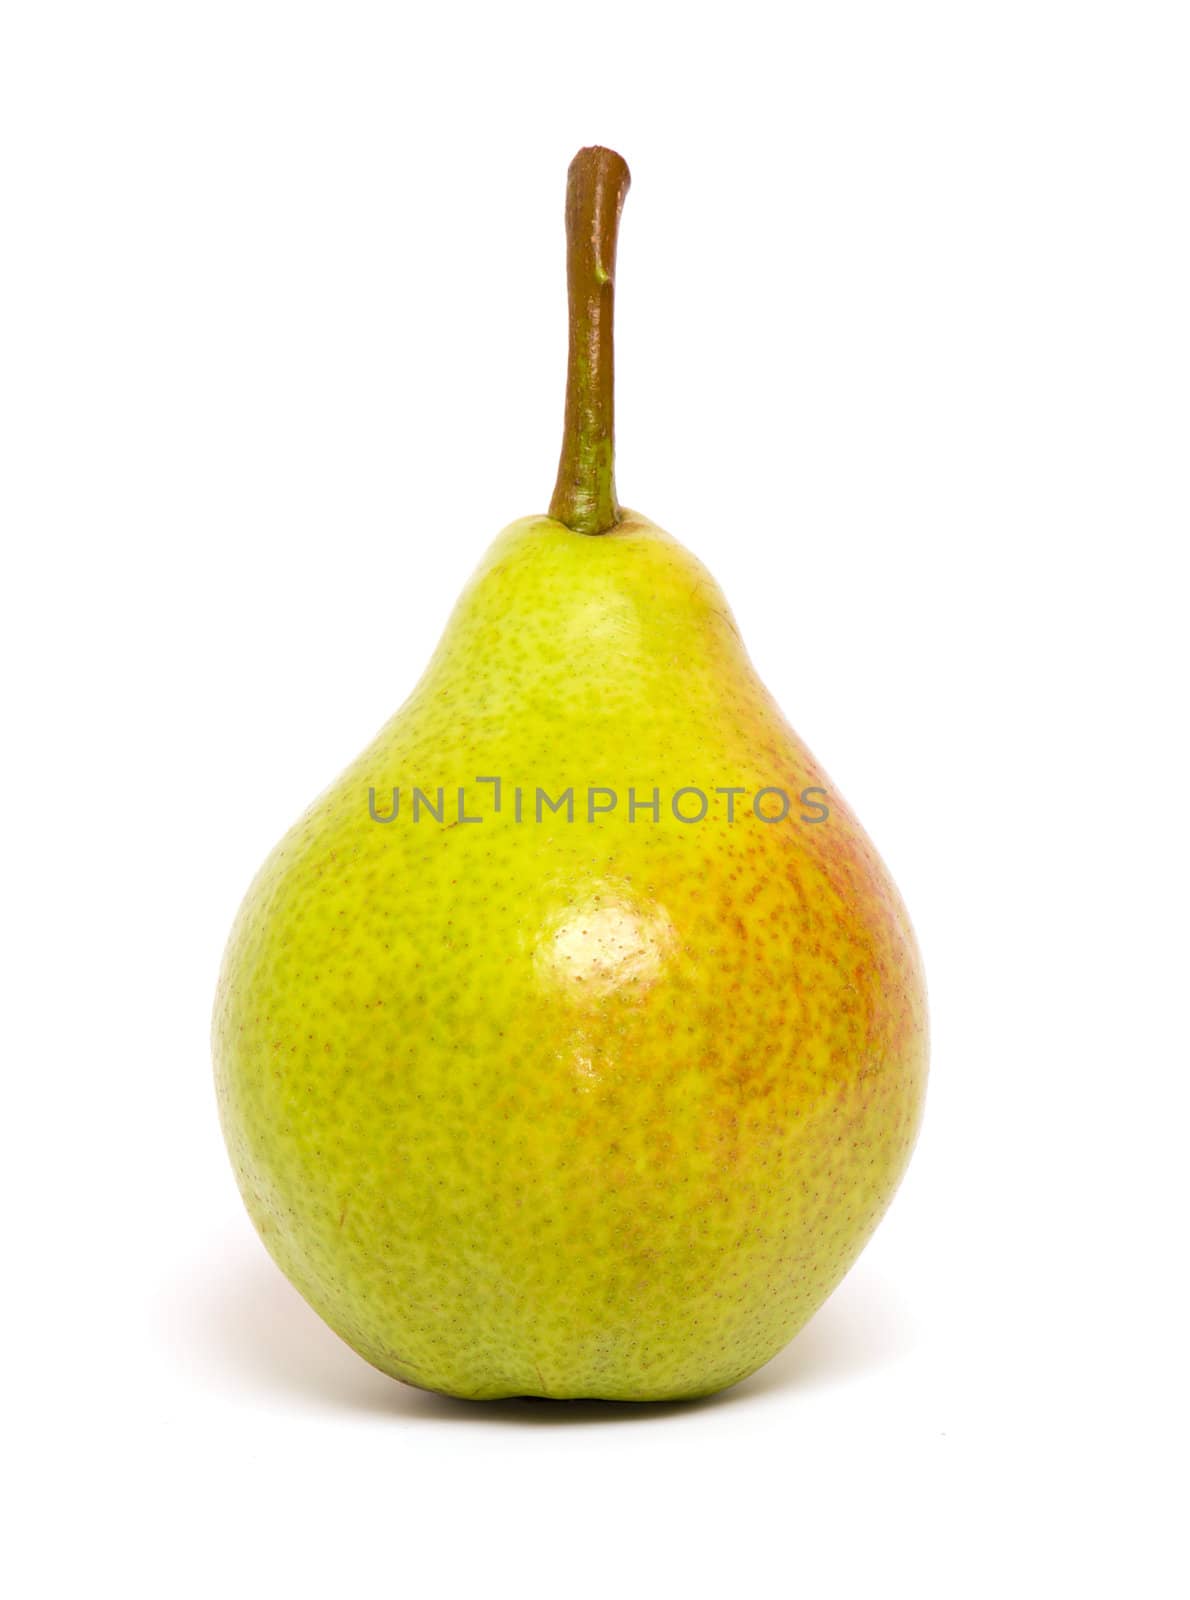 Tasty and isolated pear by Bedolaga